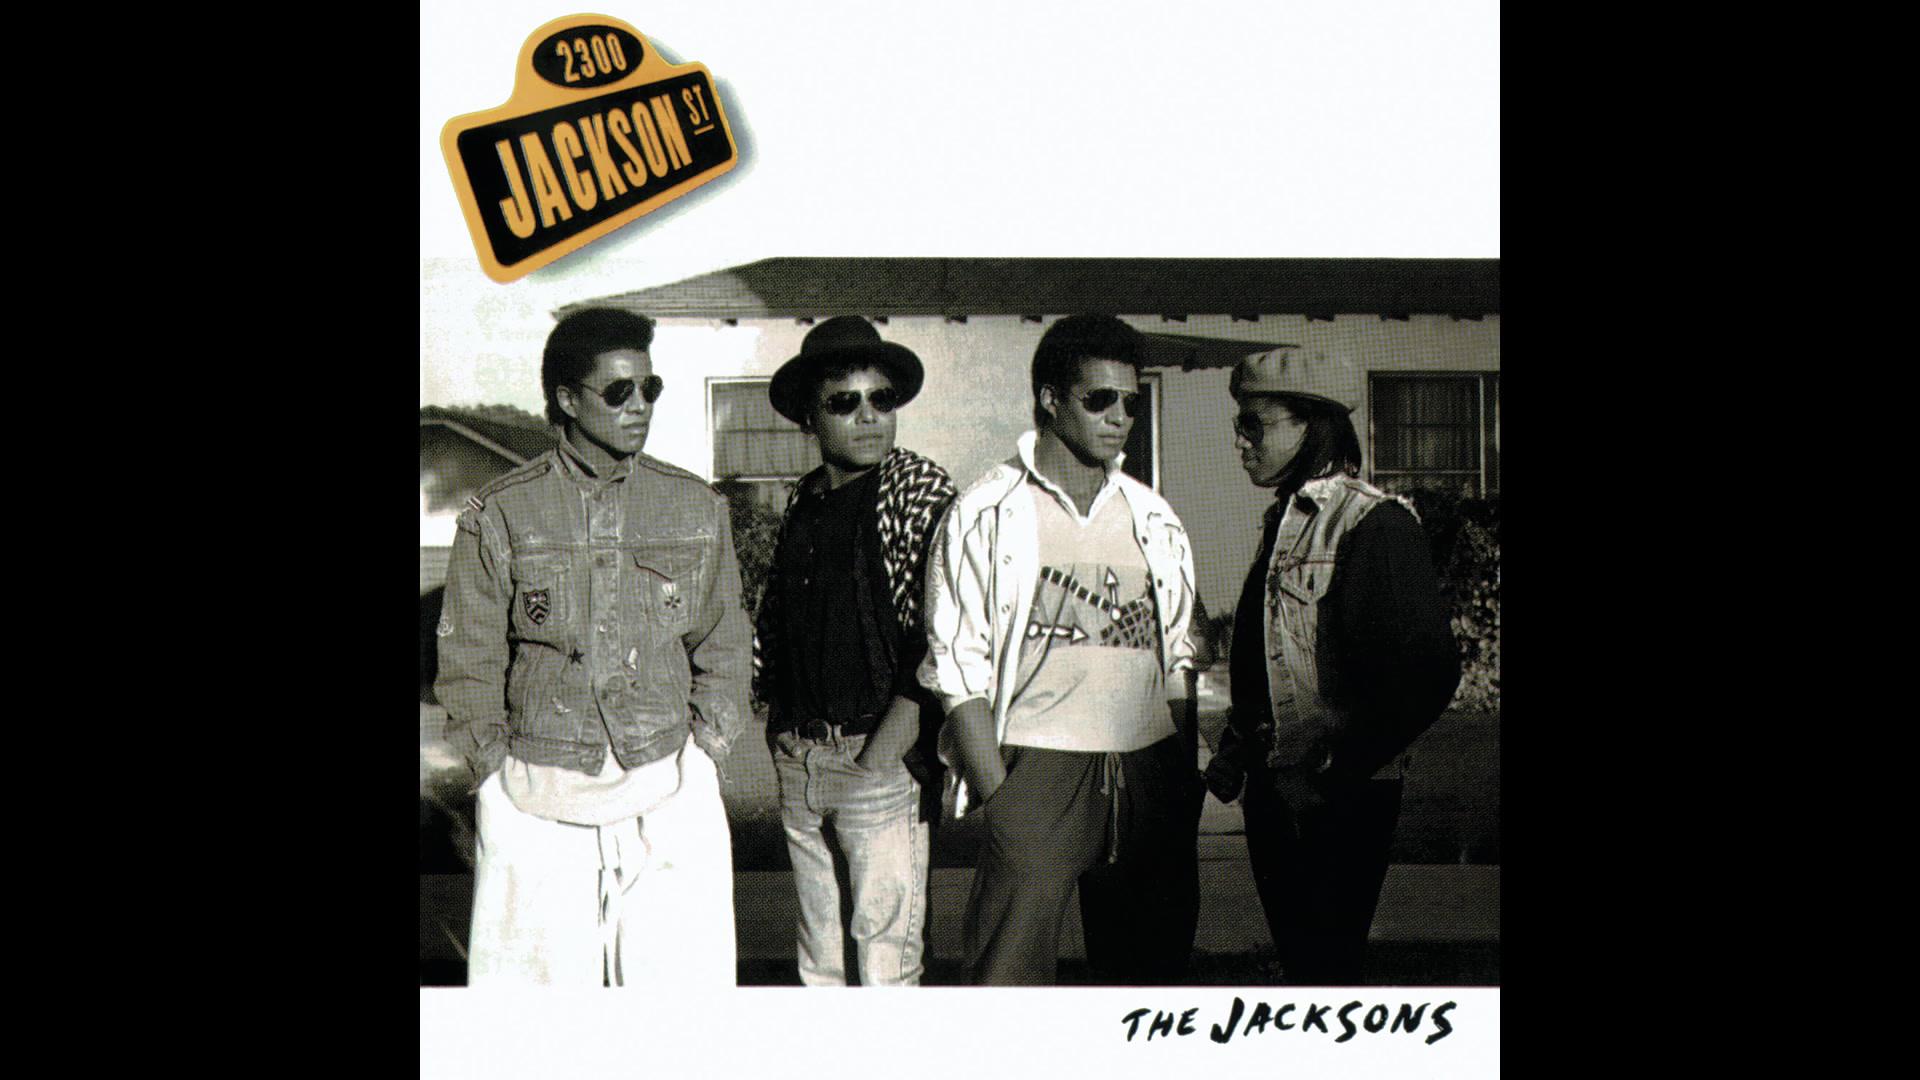 The Jacksons - 2300 Jackson Street (12